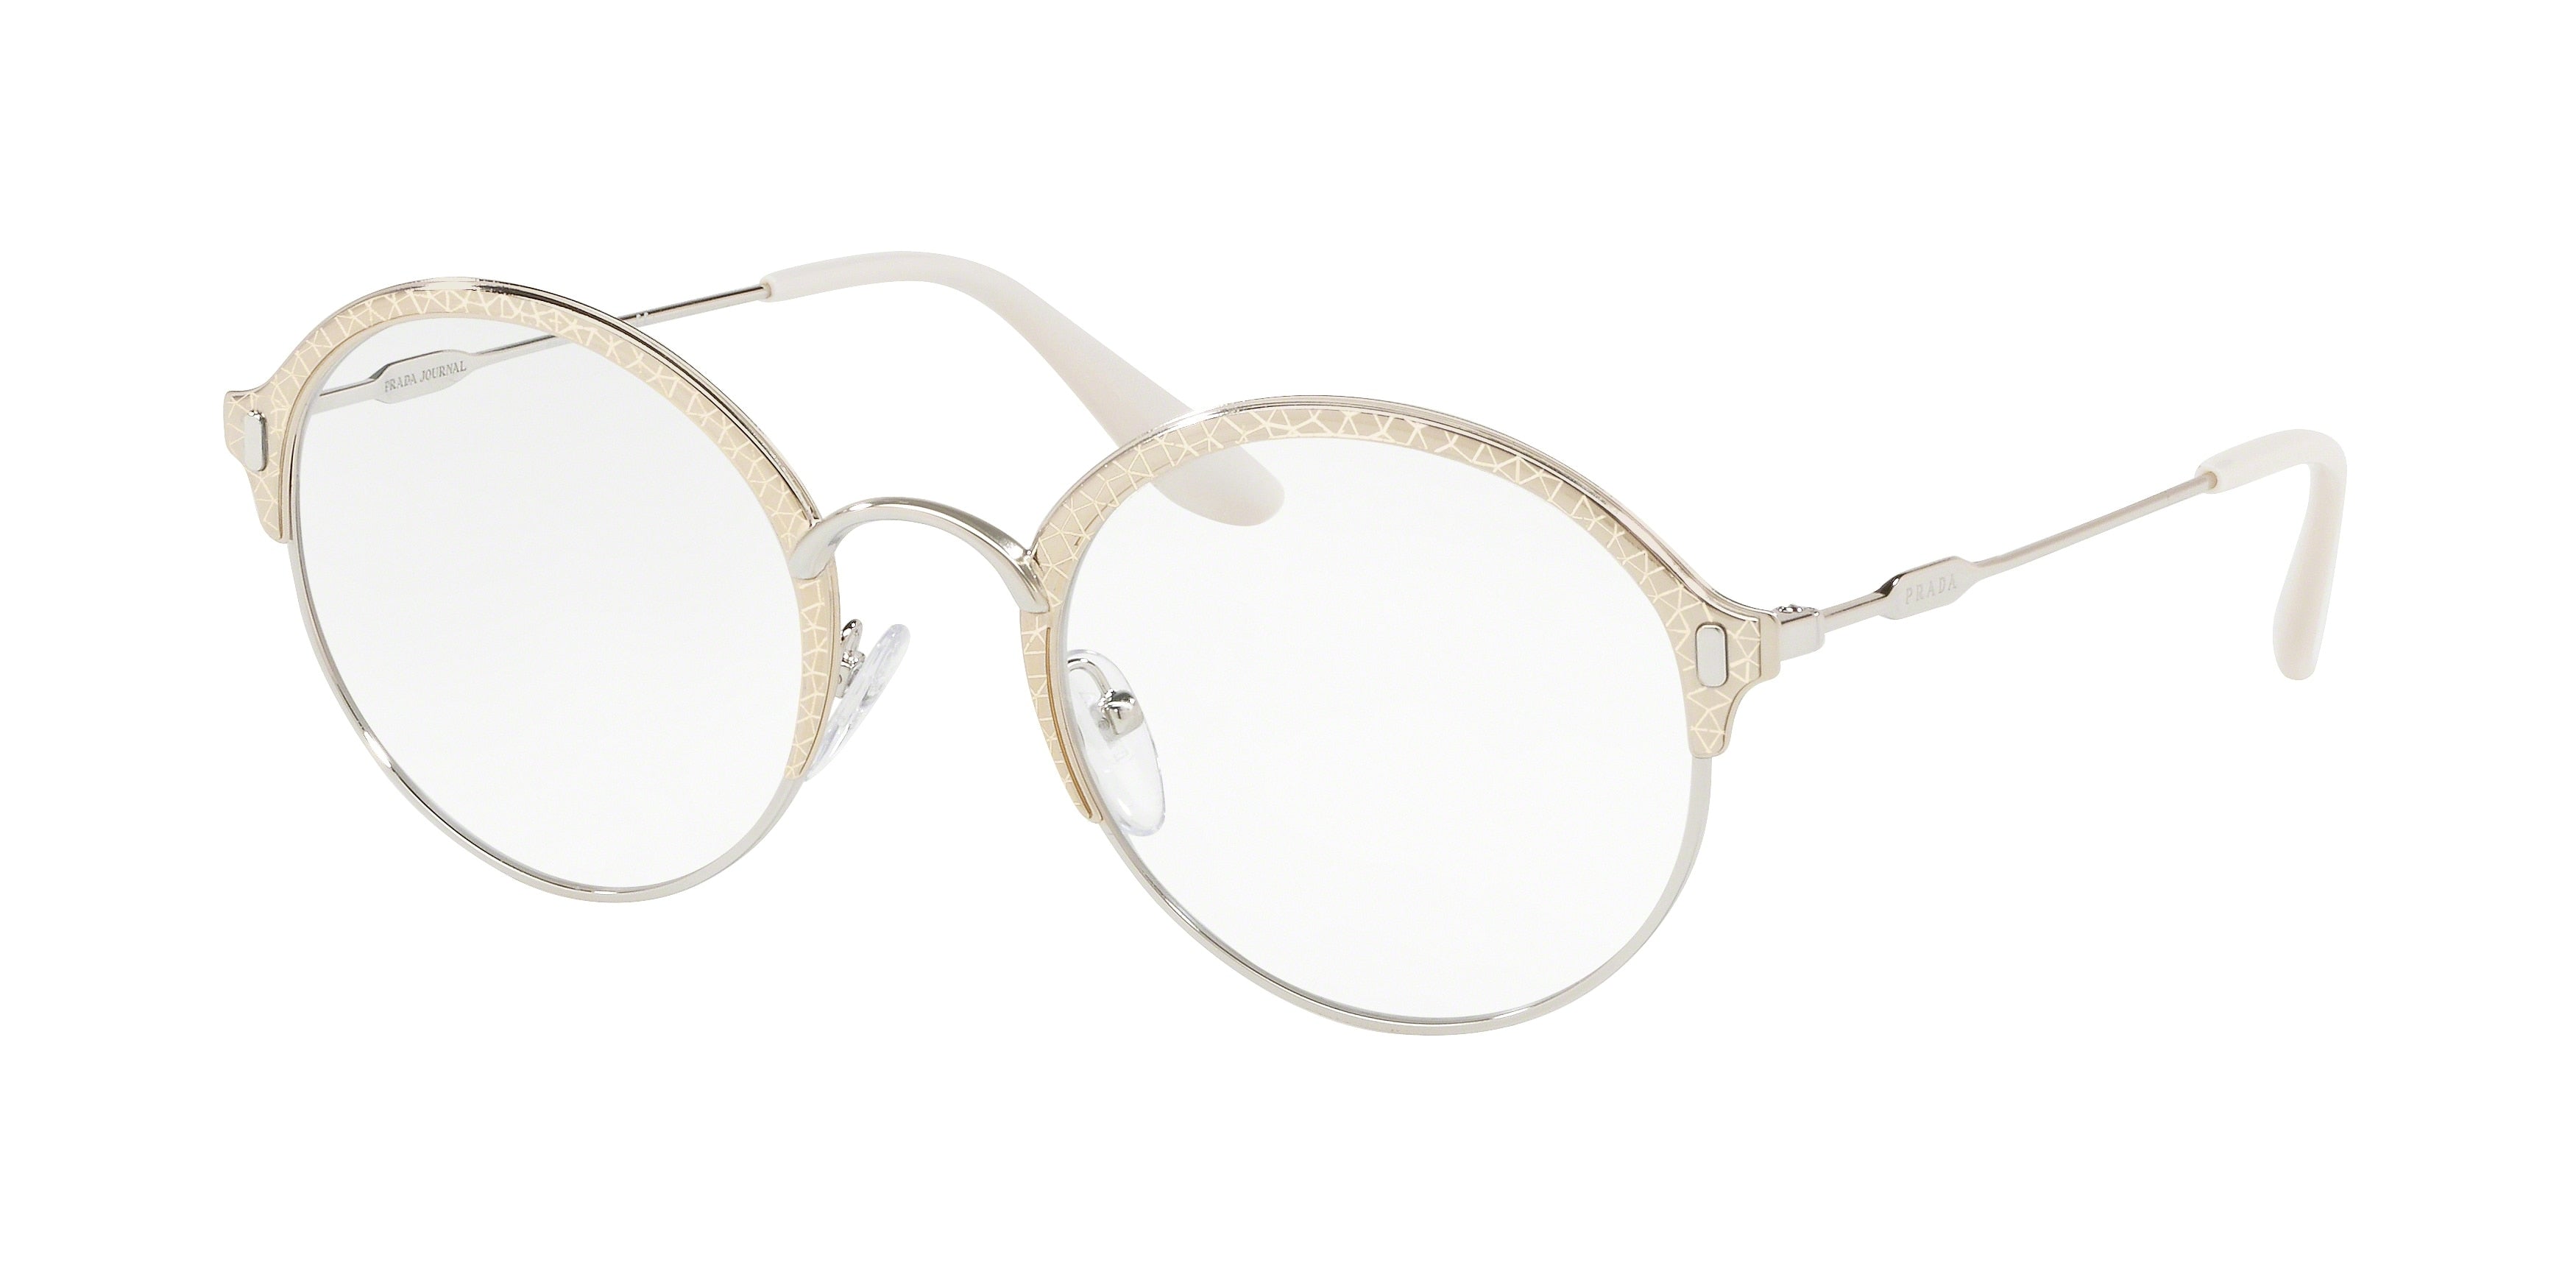 Prada CONCEPTUAL PR54VV Round Eyeglasses  2721O1-Silver/Pale Gold 51-140-21 - Color Map Silver